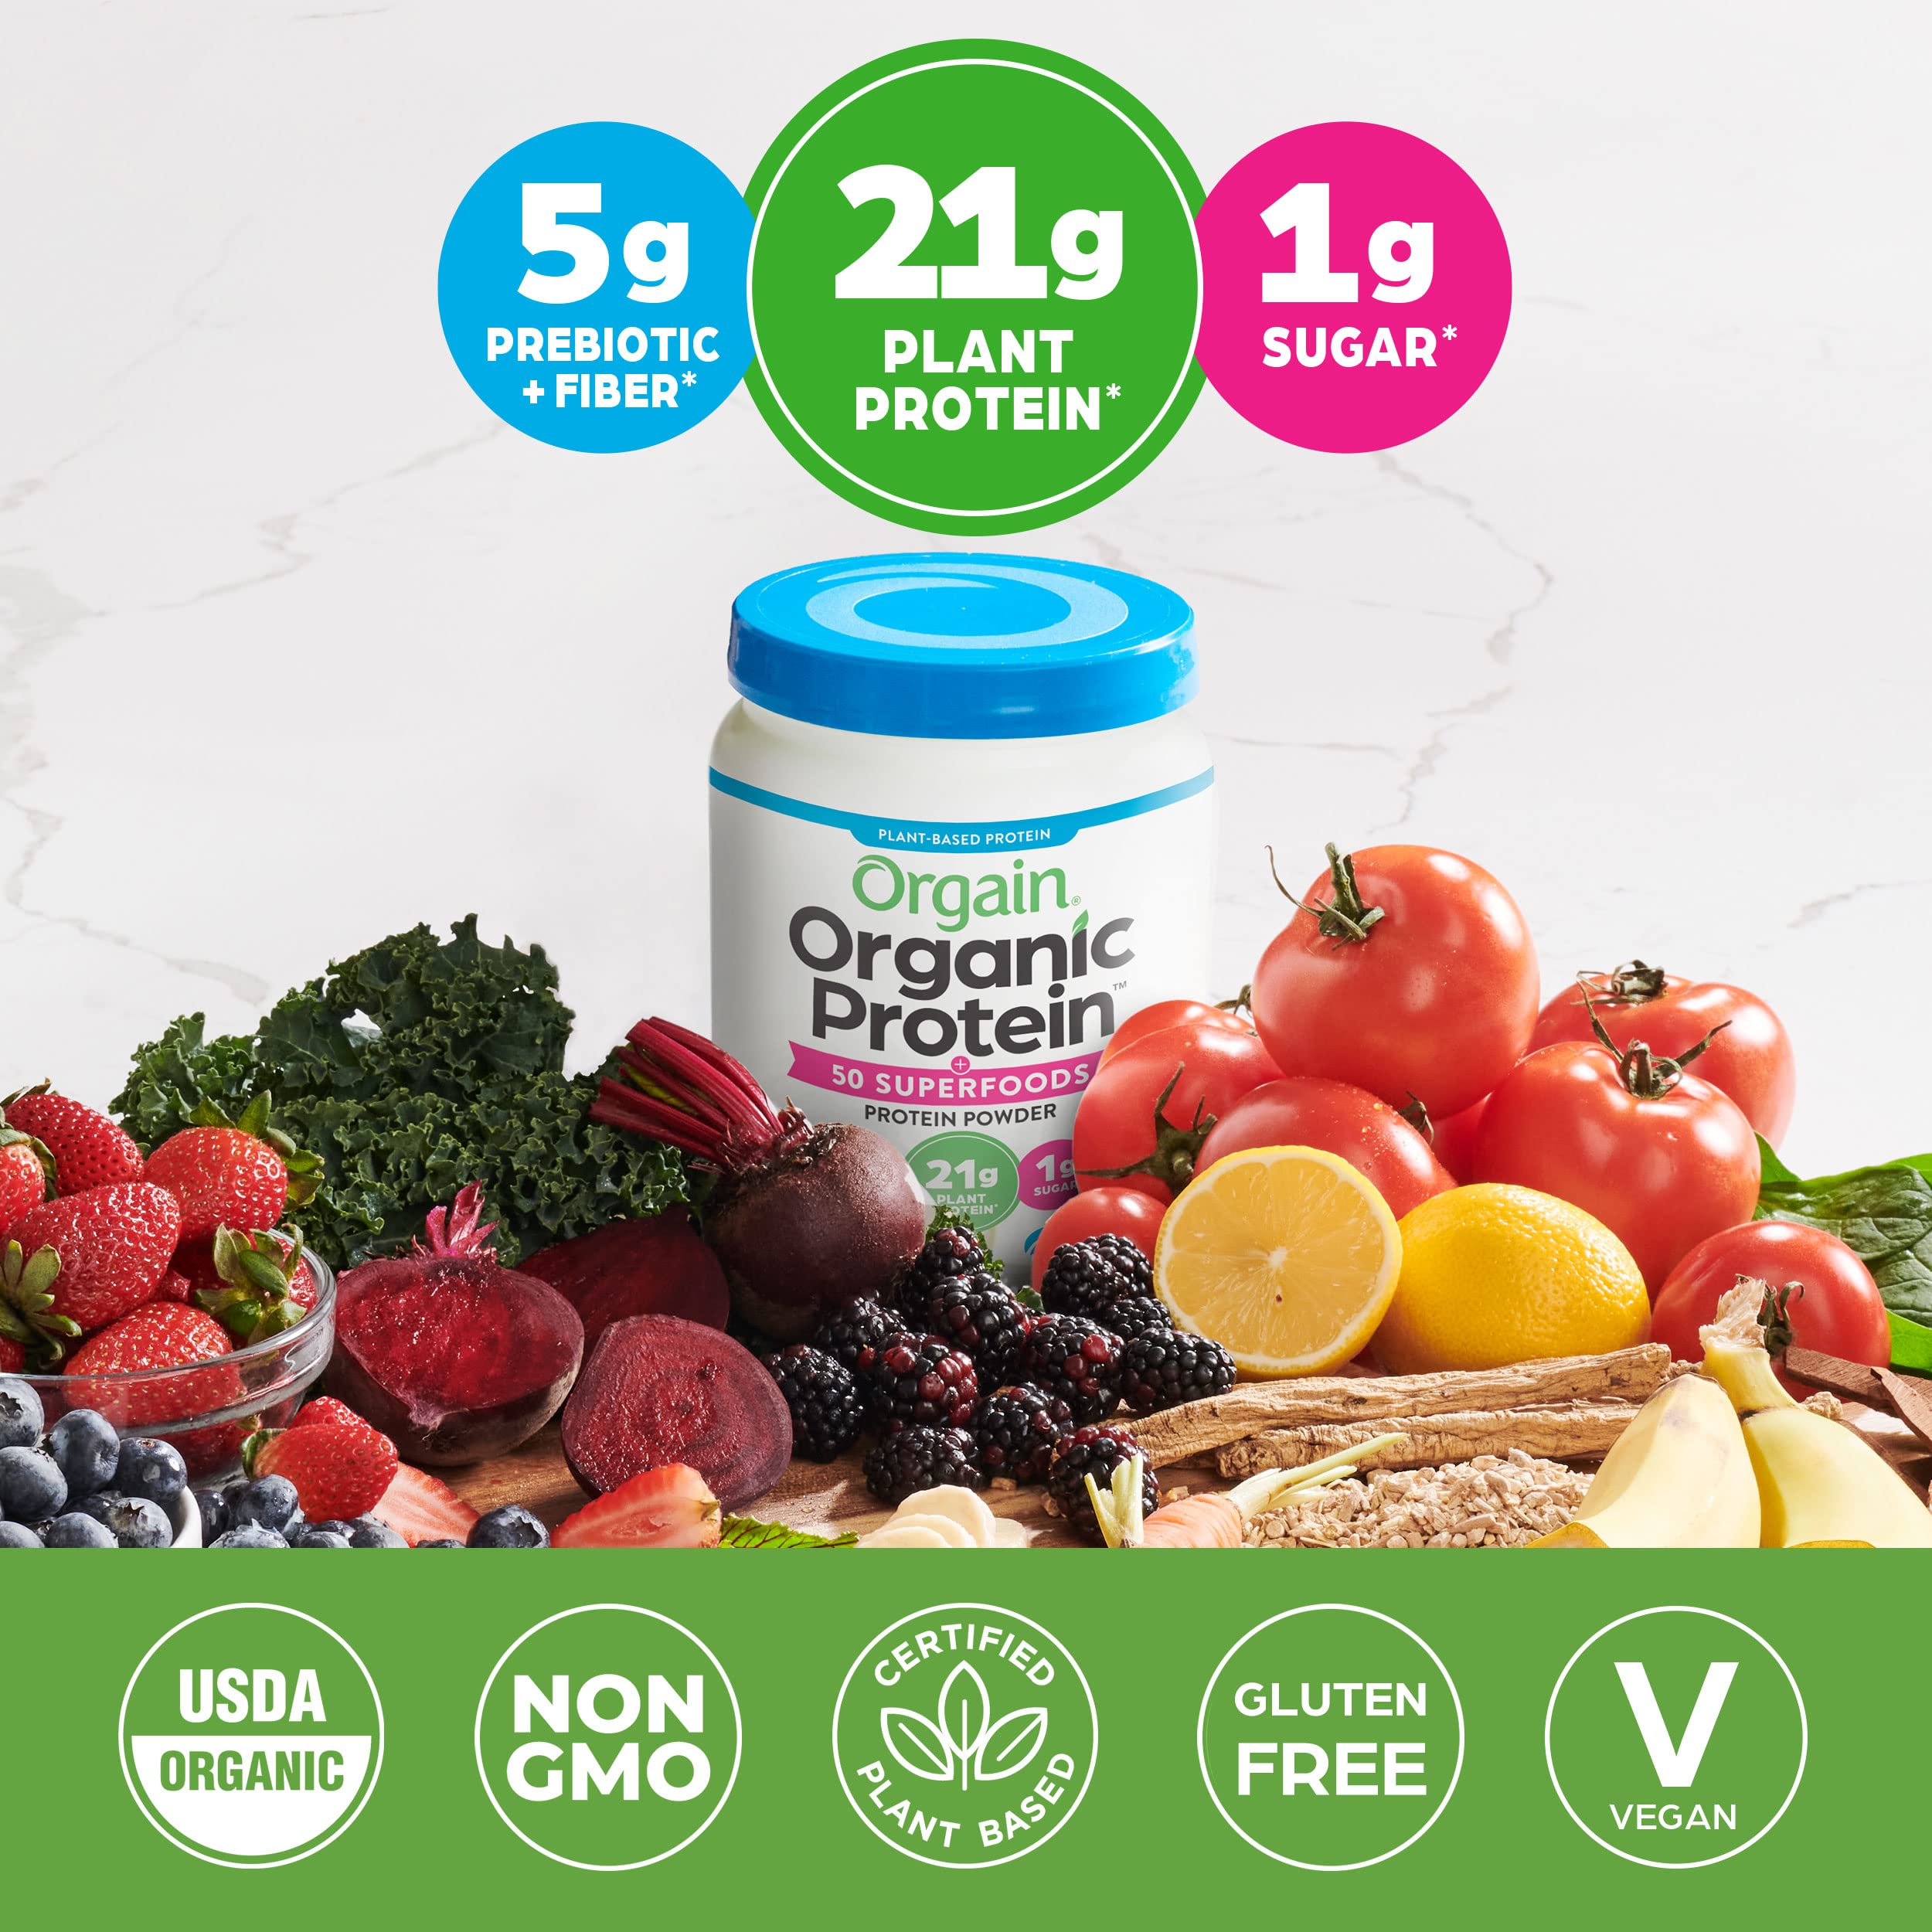 Orgain Organic Protein + Superfoods Powder, Vanilla Bean - 21g of Protein, Vegan, Plant Based, 5g of Fiber, No Dairy, Gluten, Soy or Added Sugar, Non-GMO, 1.12lb